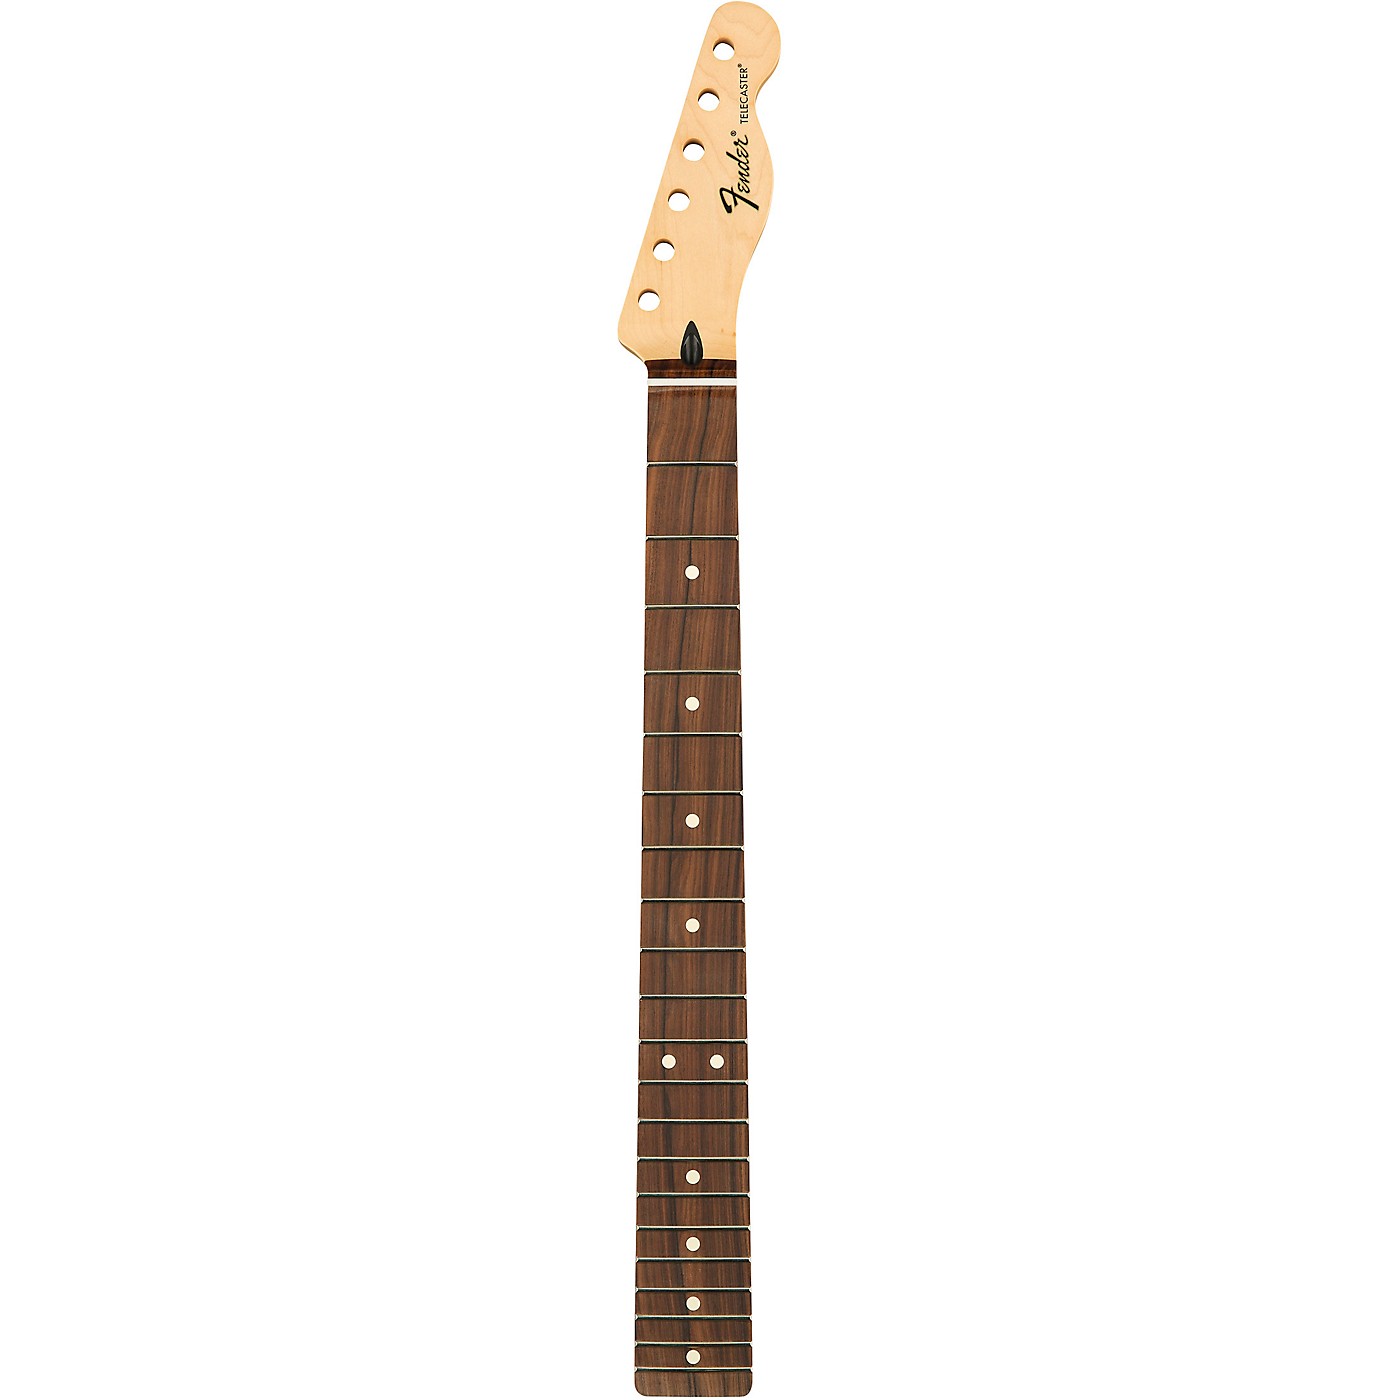 Fender Standard Series Telecaster Neck with Pau Ferro Fingerboard thumbnail